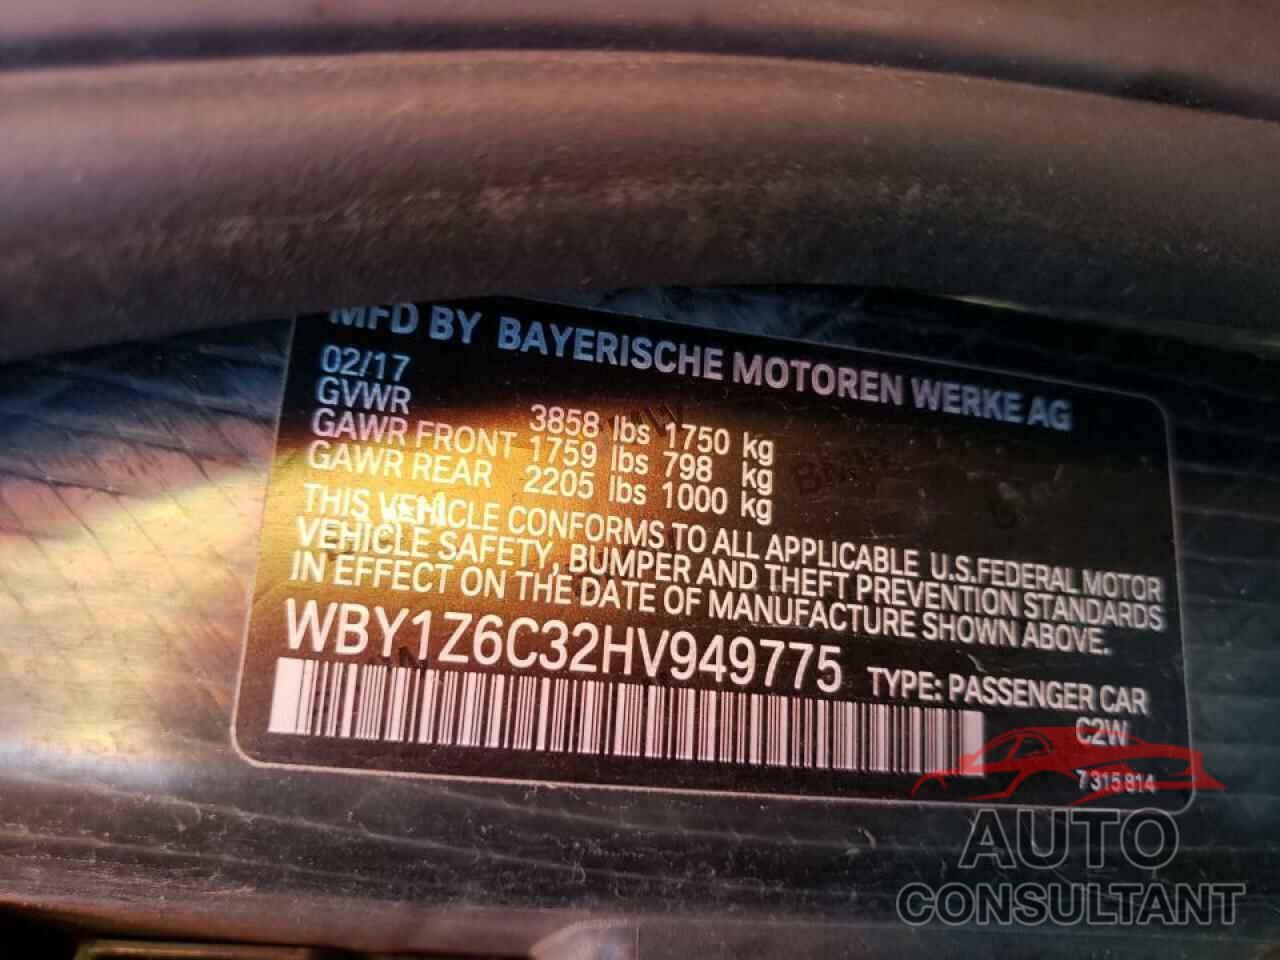 BMW I SERIES 2017 - WBY1Z6C32HV949775